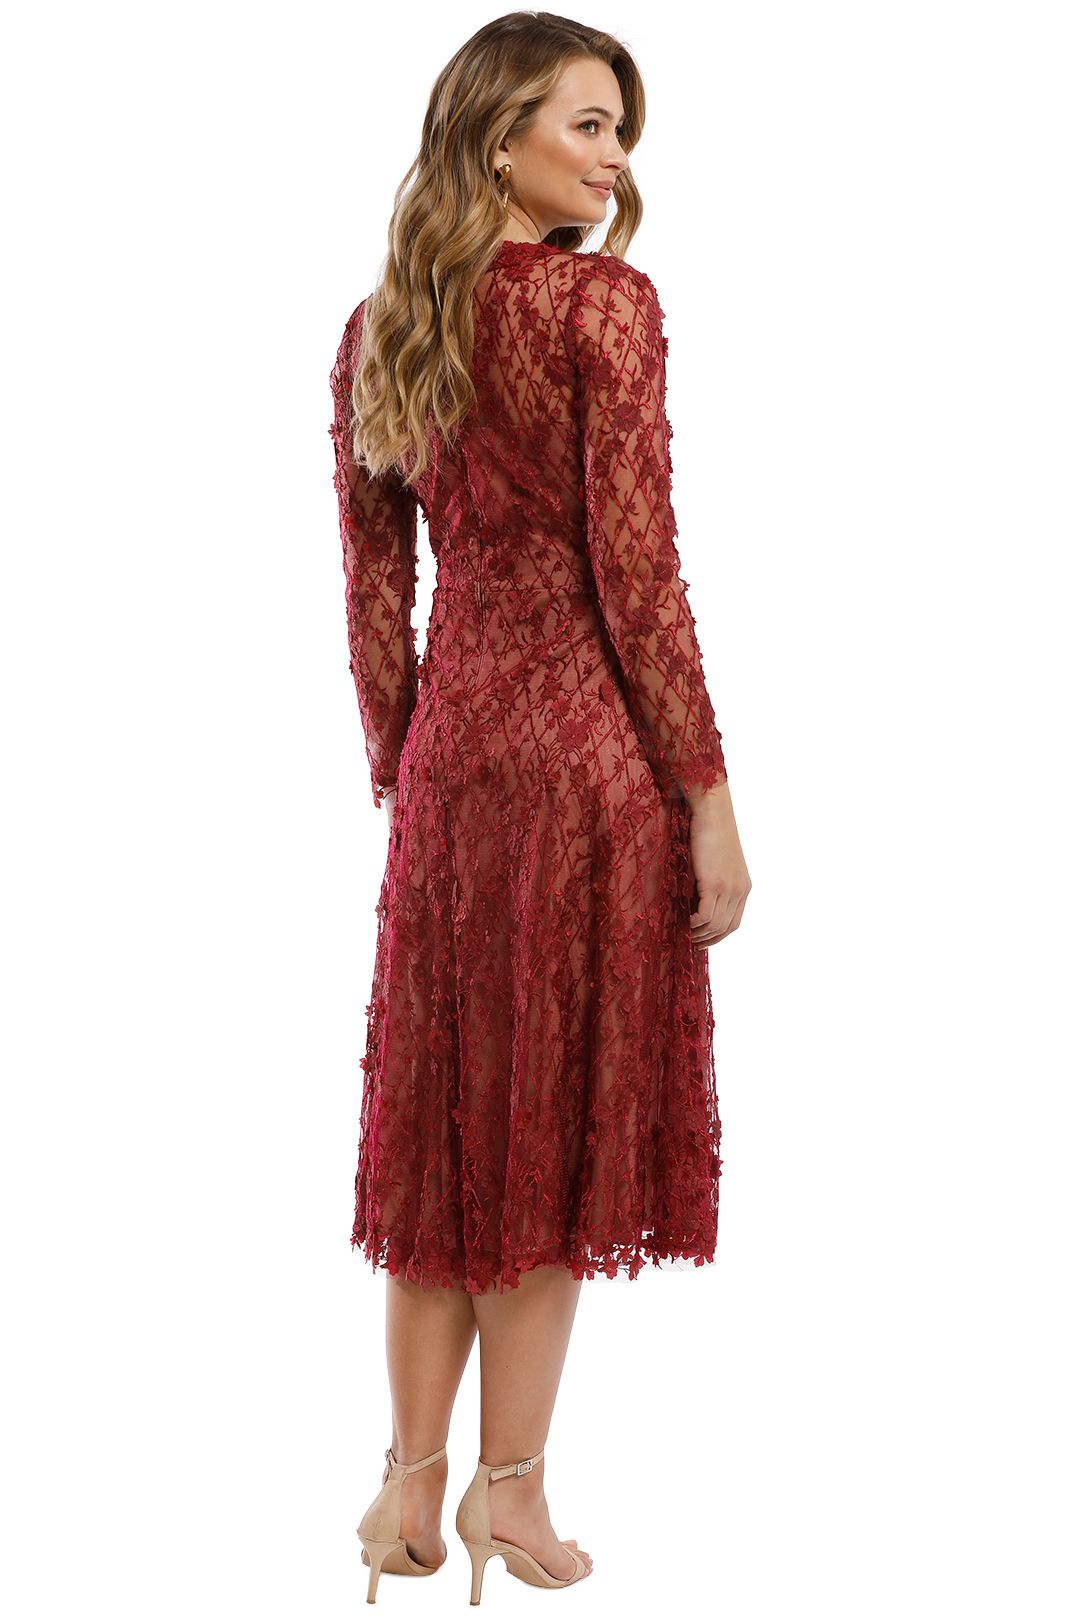 Tadashi Shoji - Binx Embroidery Tea-Length Dress - Roseberry - Back